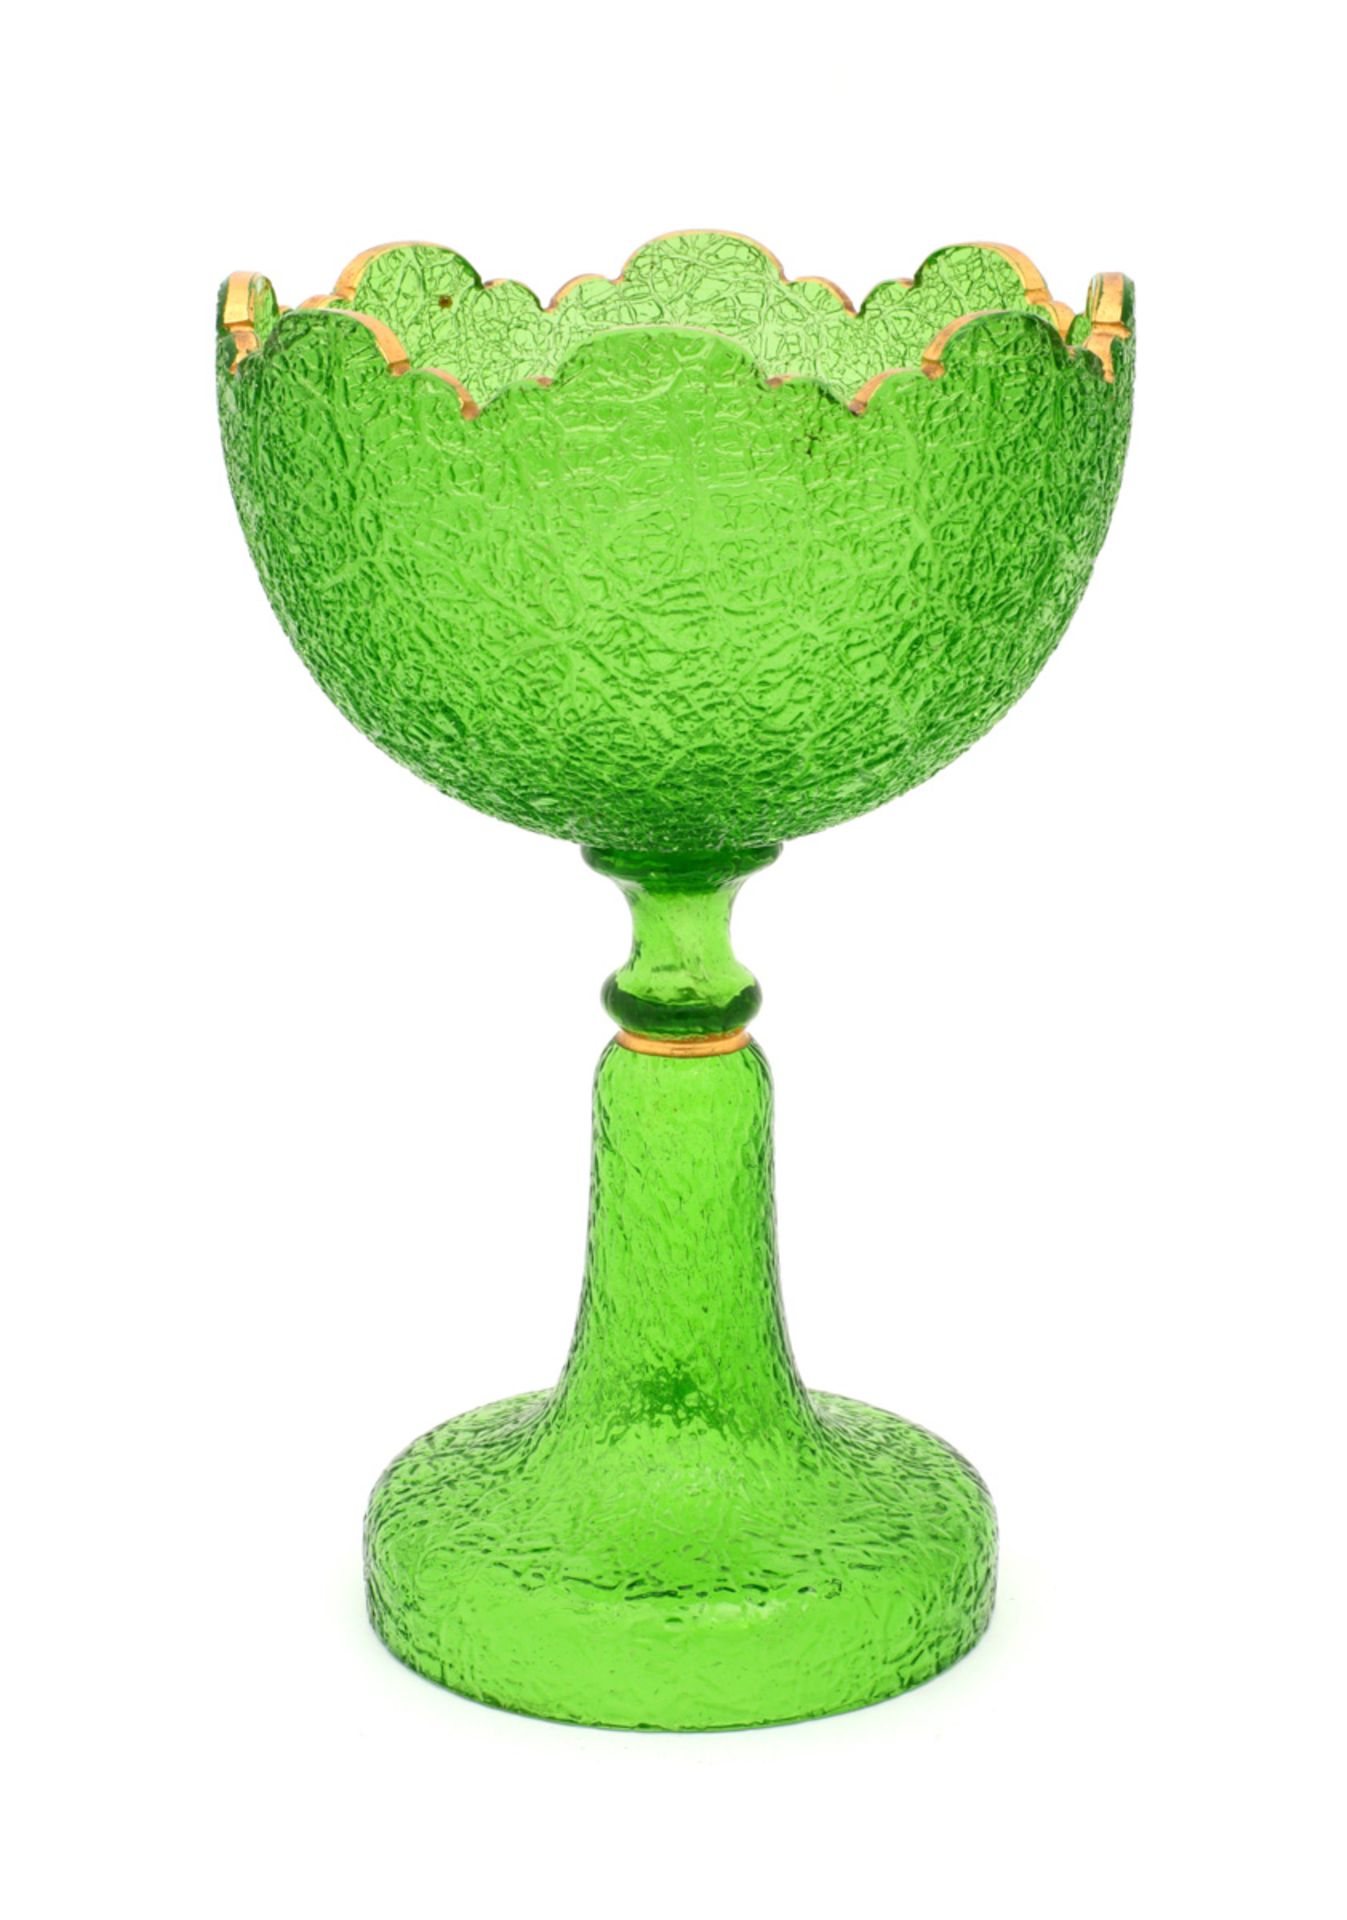 A BOHEMIAN CRYSTAL BOWL Green crystal, "ice-glass" decoration with gilt edge. Bohemia, late 19th